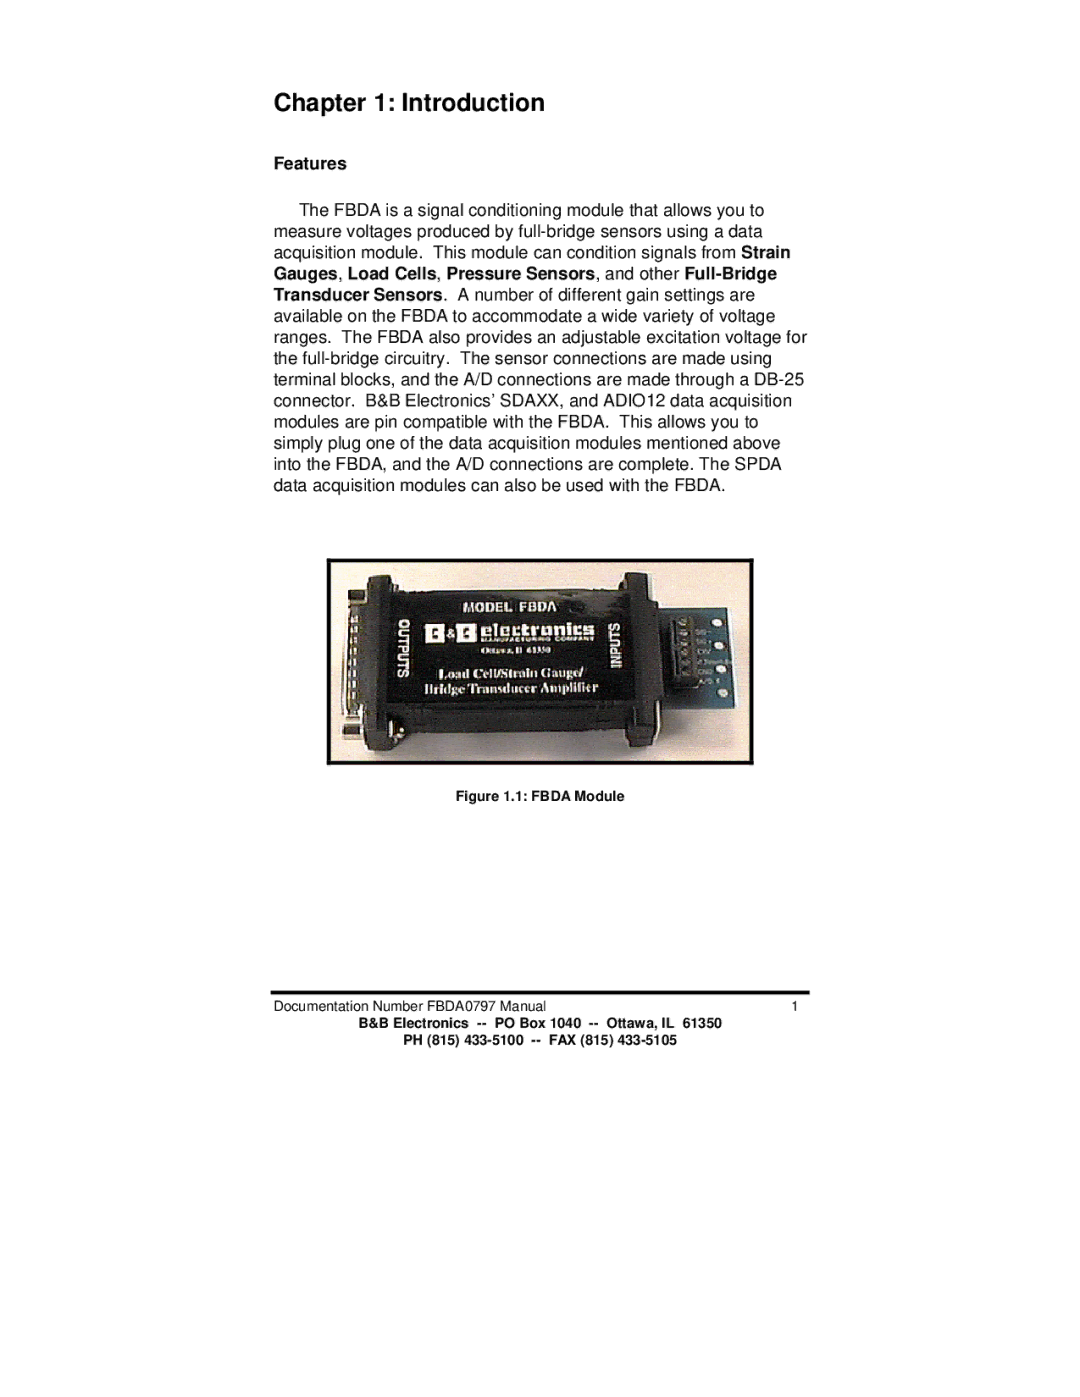 B&B Electronics FBDA manual Introduction, Features 